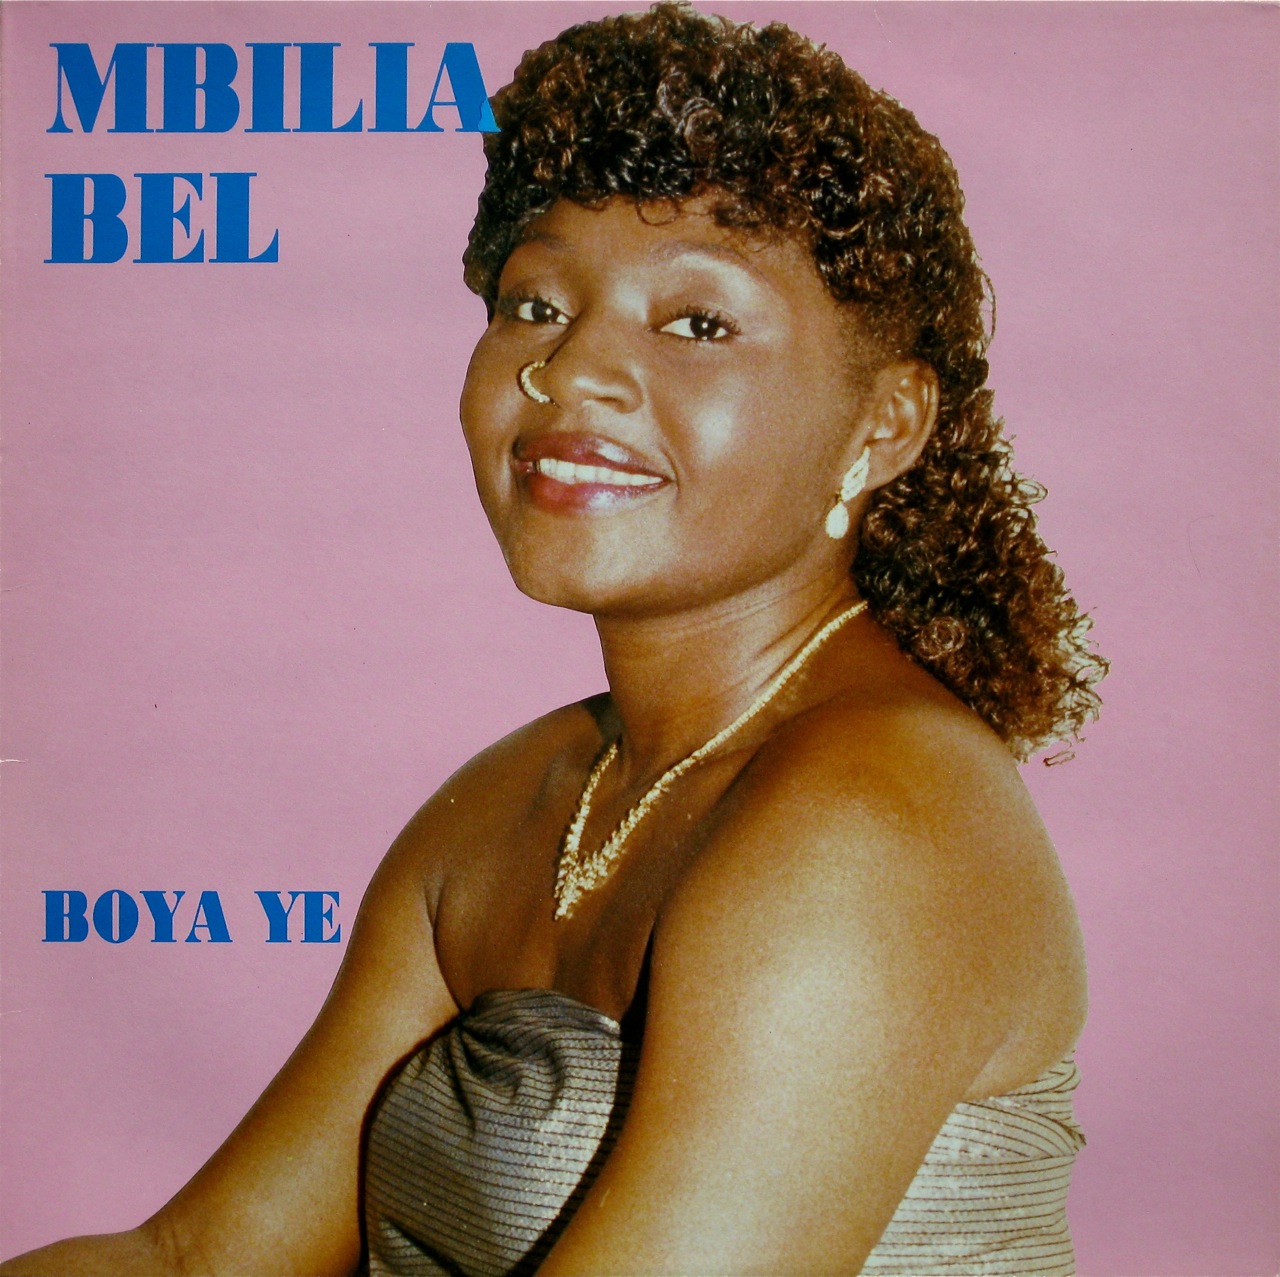 Mbilia Bel - Boya Ye (1985) Boya+Ye+front